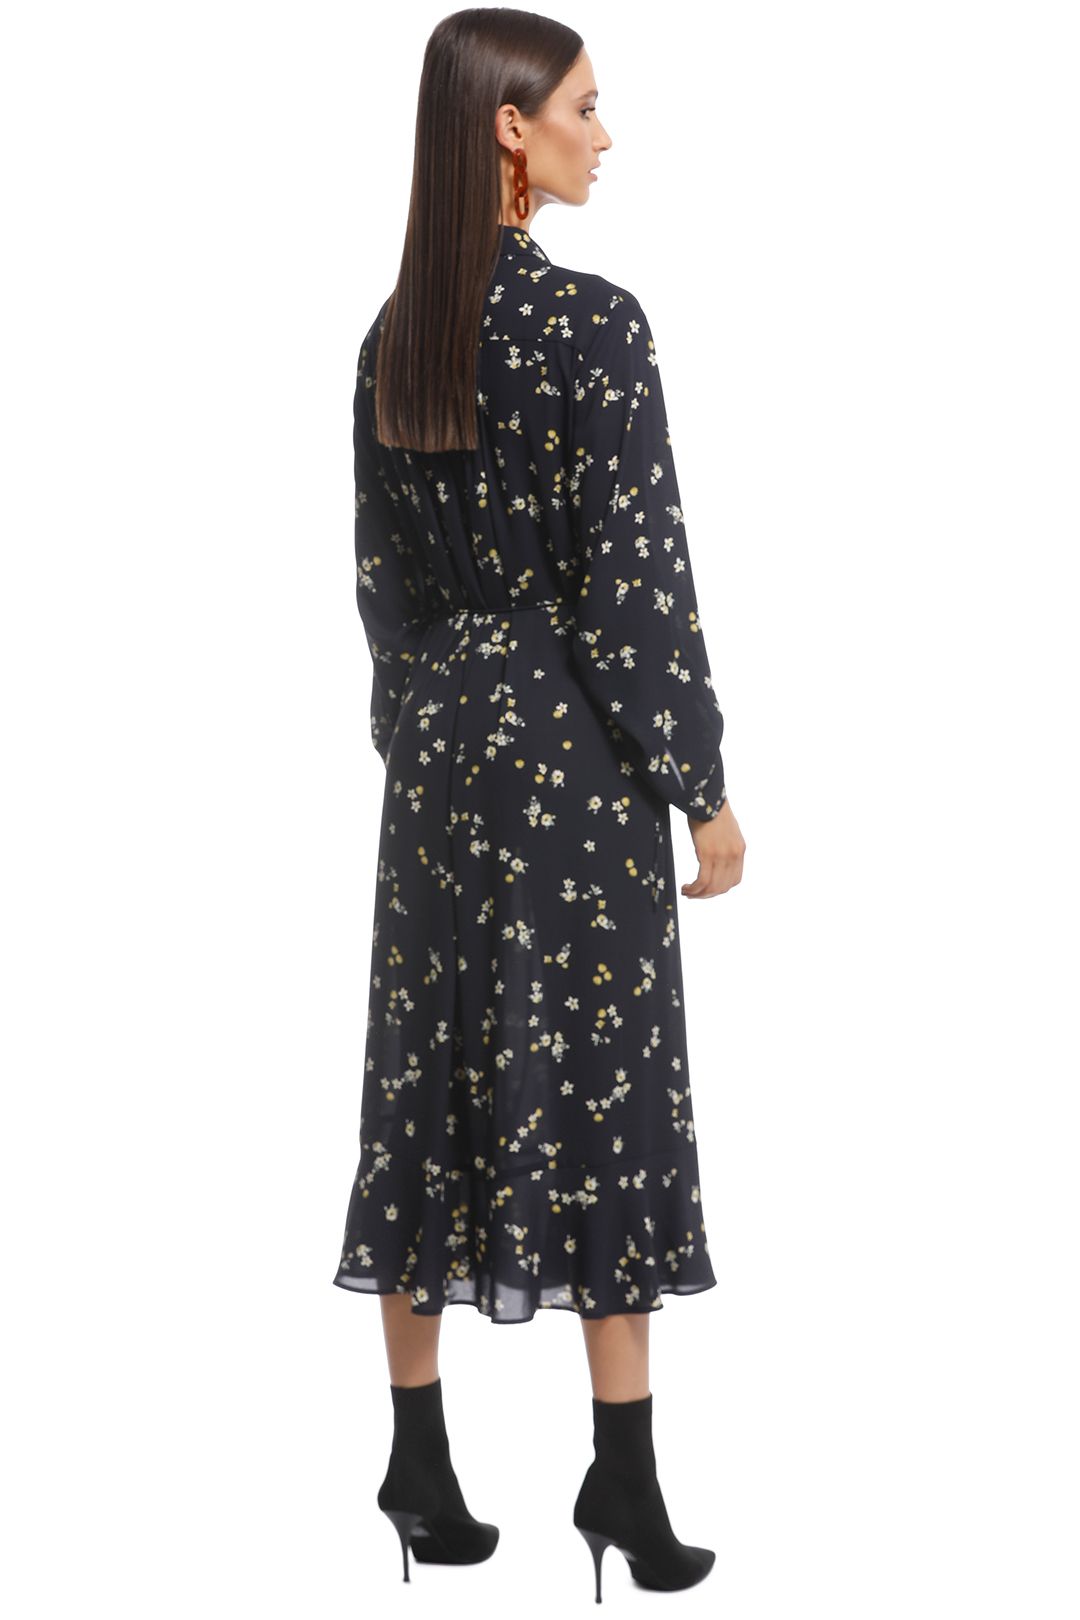 Dainty Floral Shirt Dress by Veronika Maine for Rent | GlamCorner